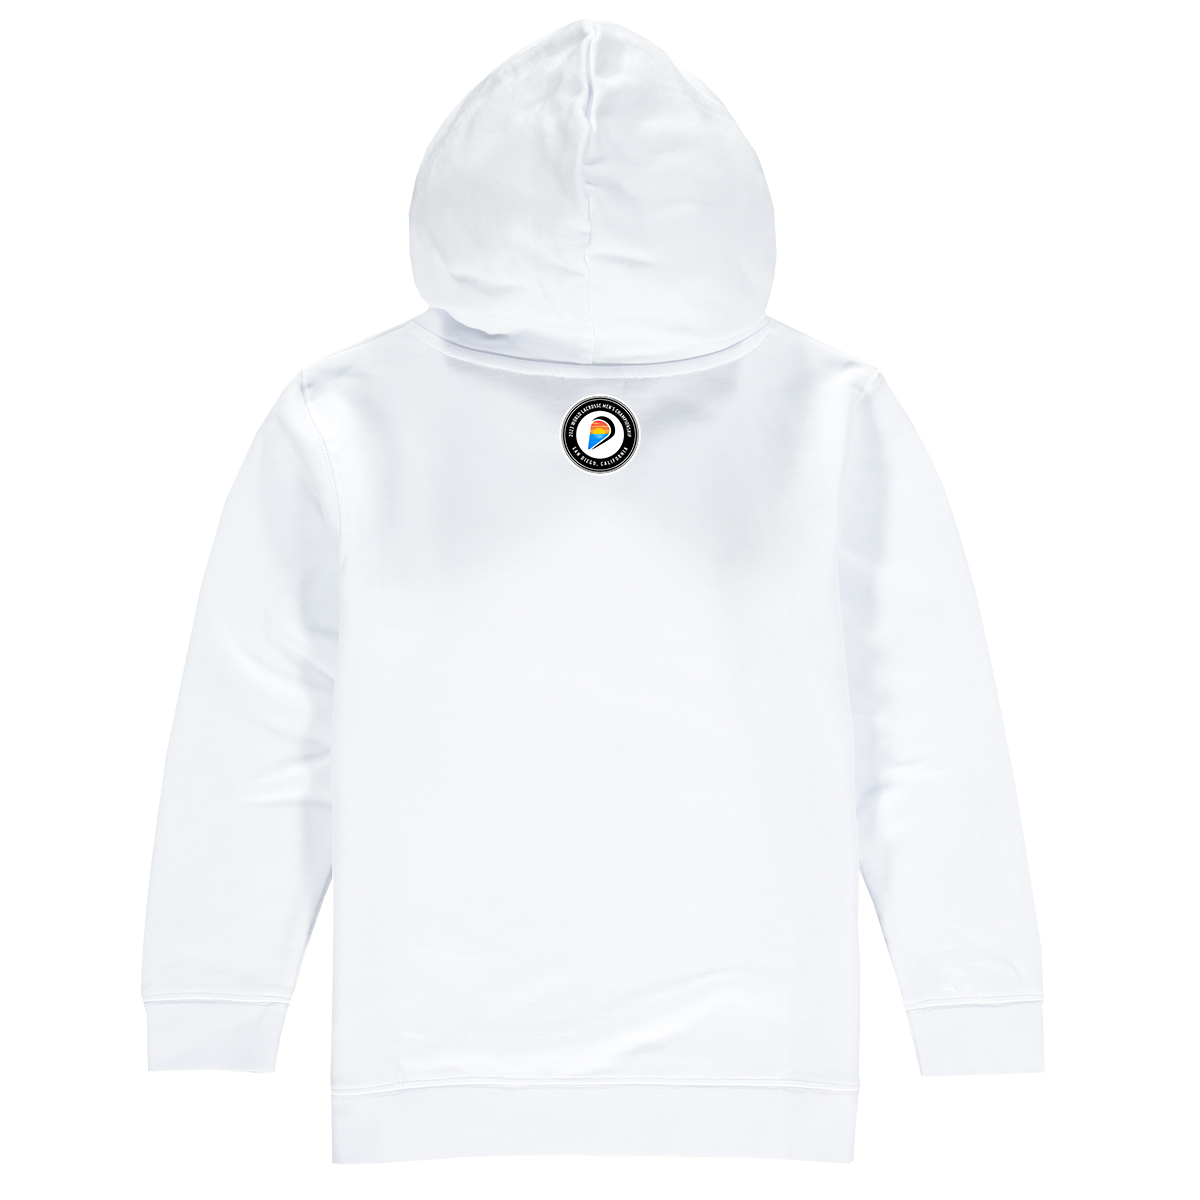 France Premium Unisex Hoodie Sweatshirt White